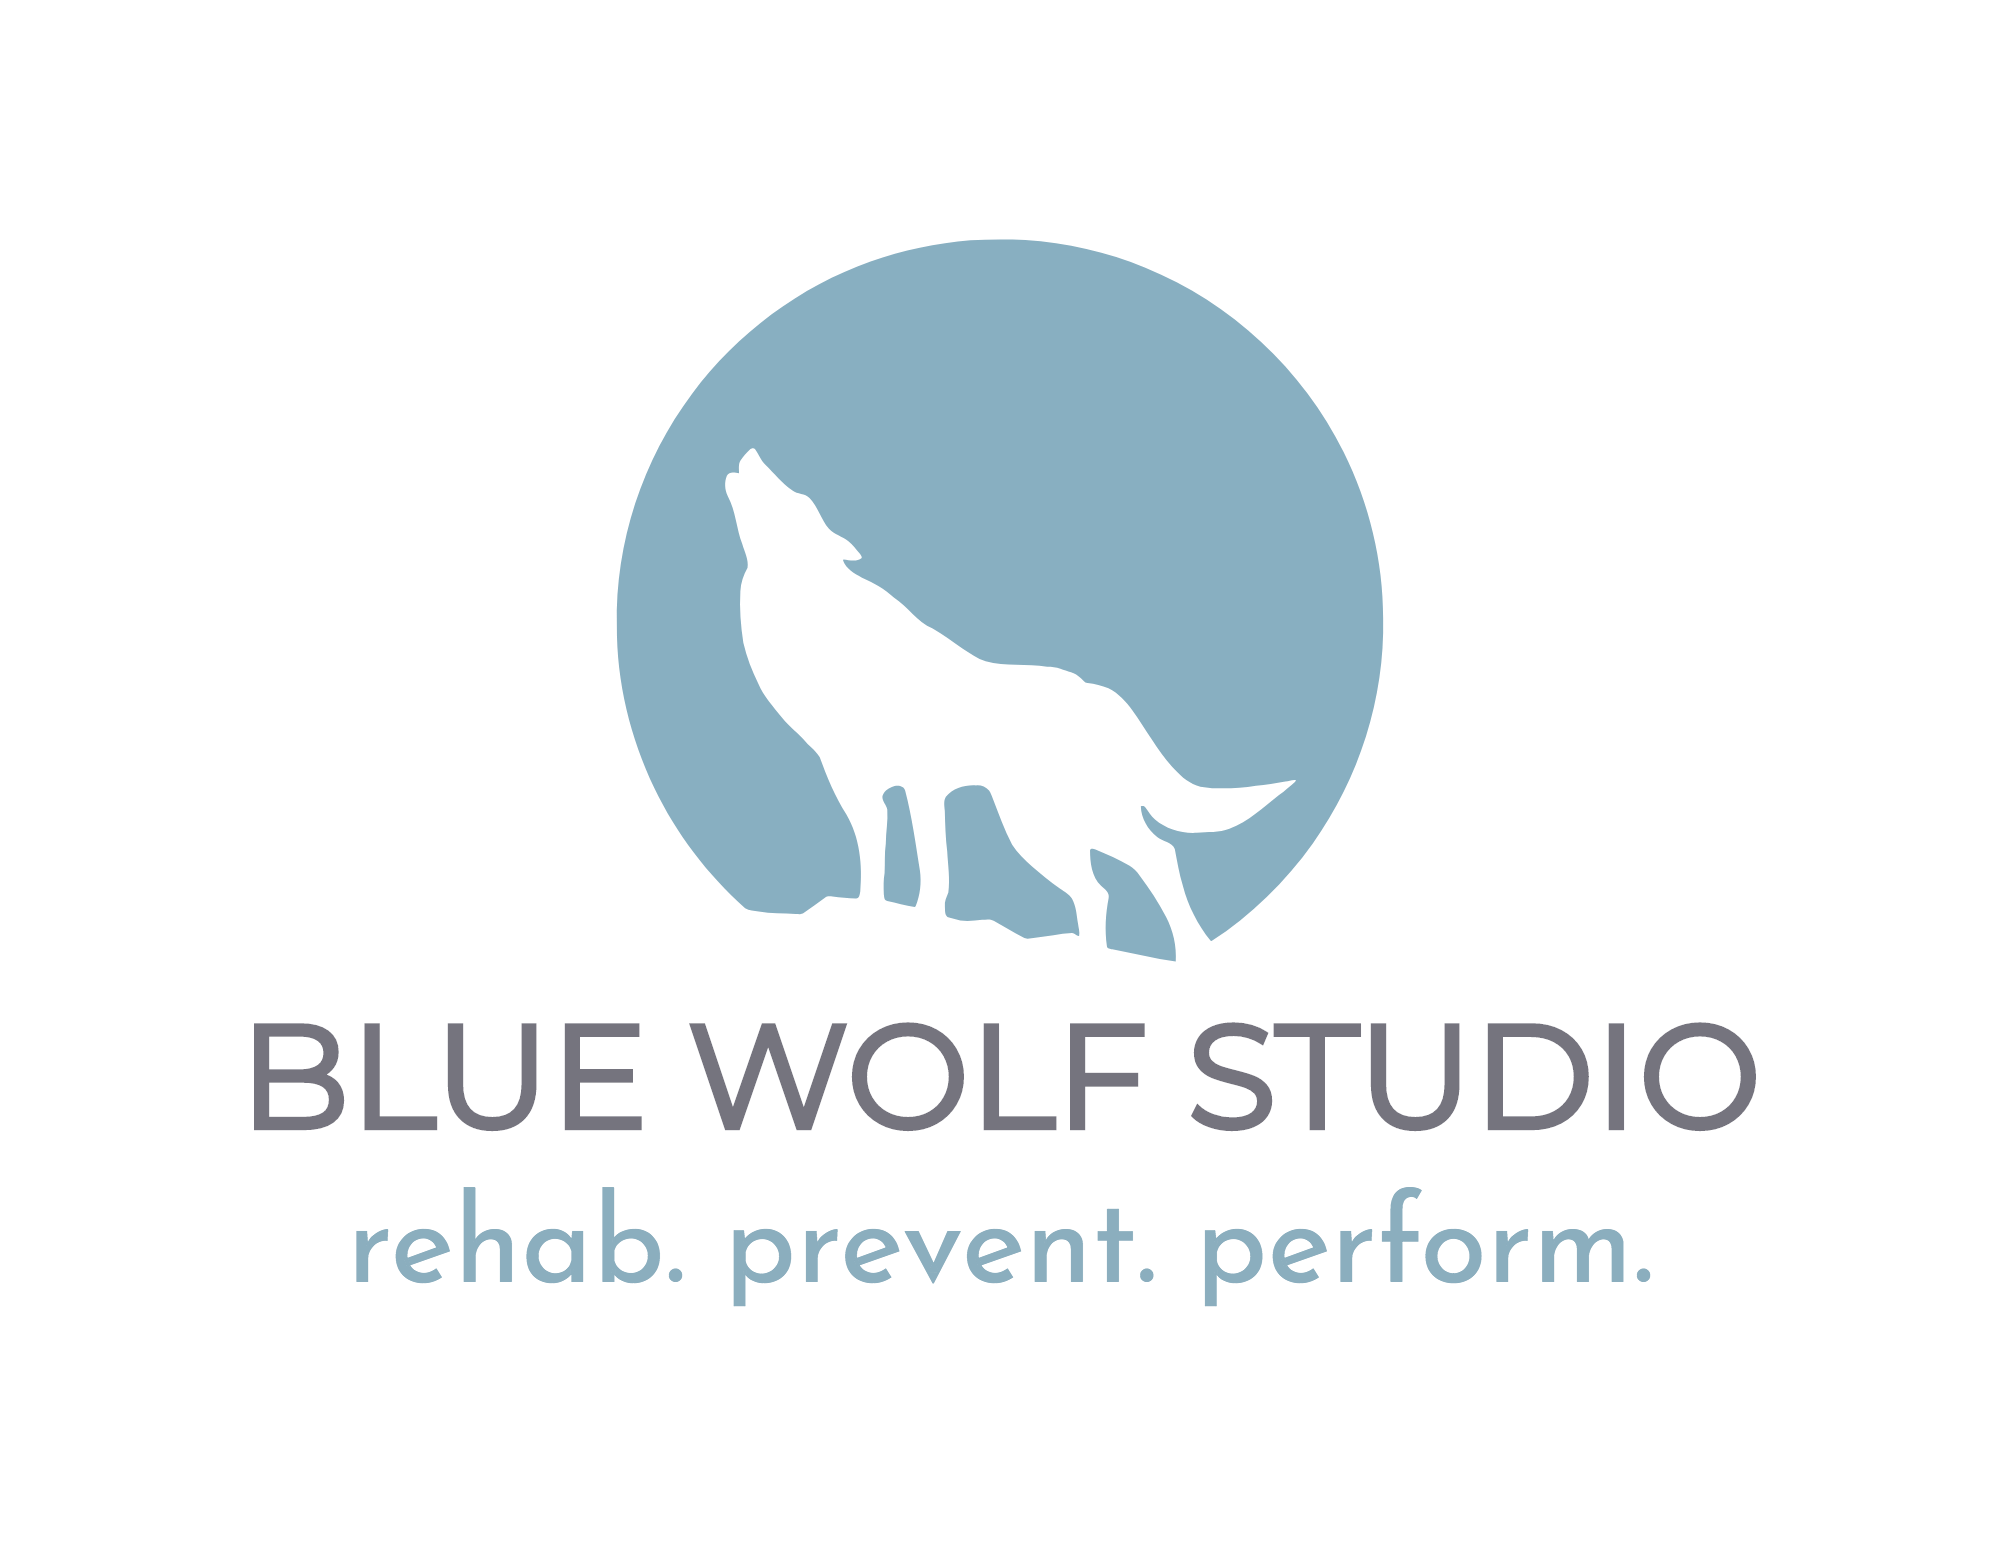 BLUE WOLF STUDIO